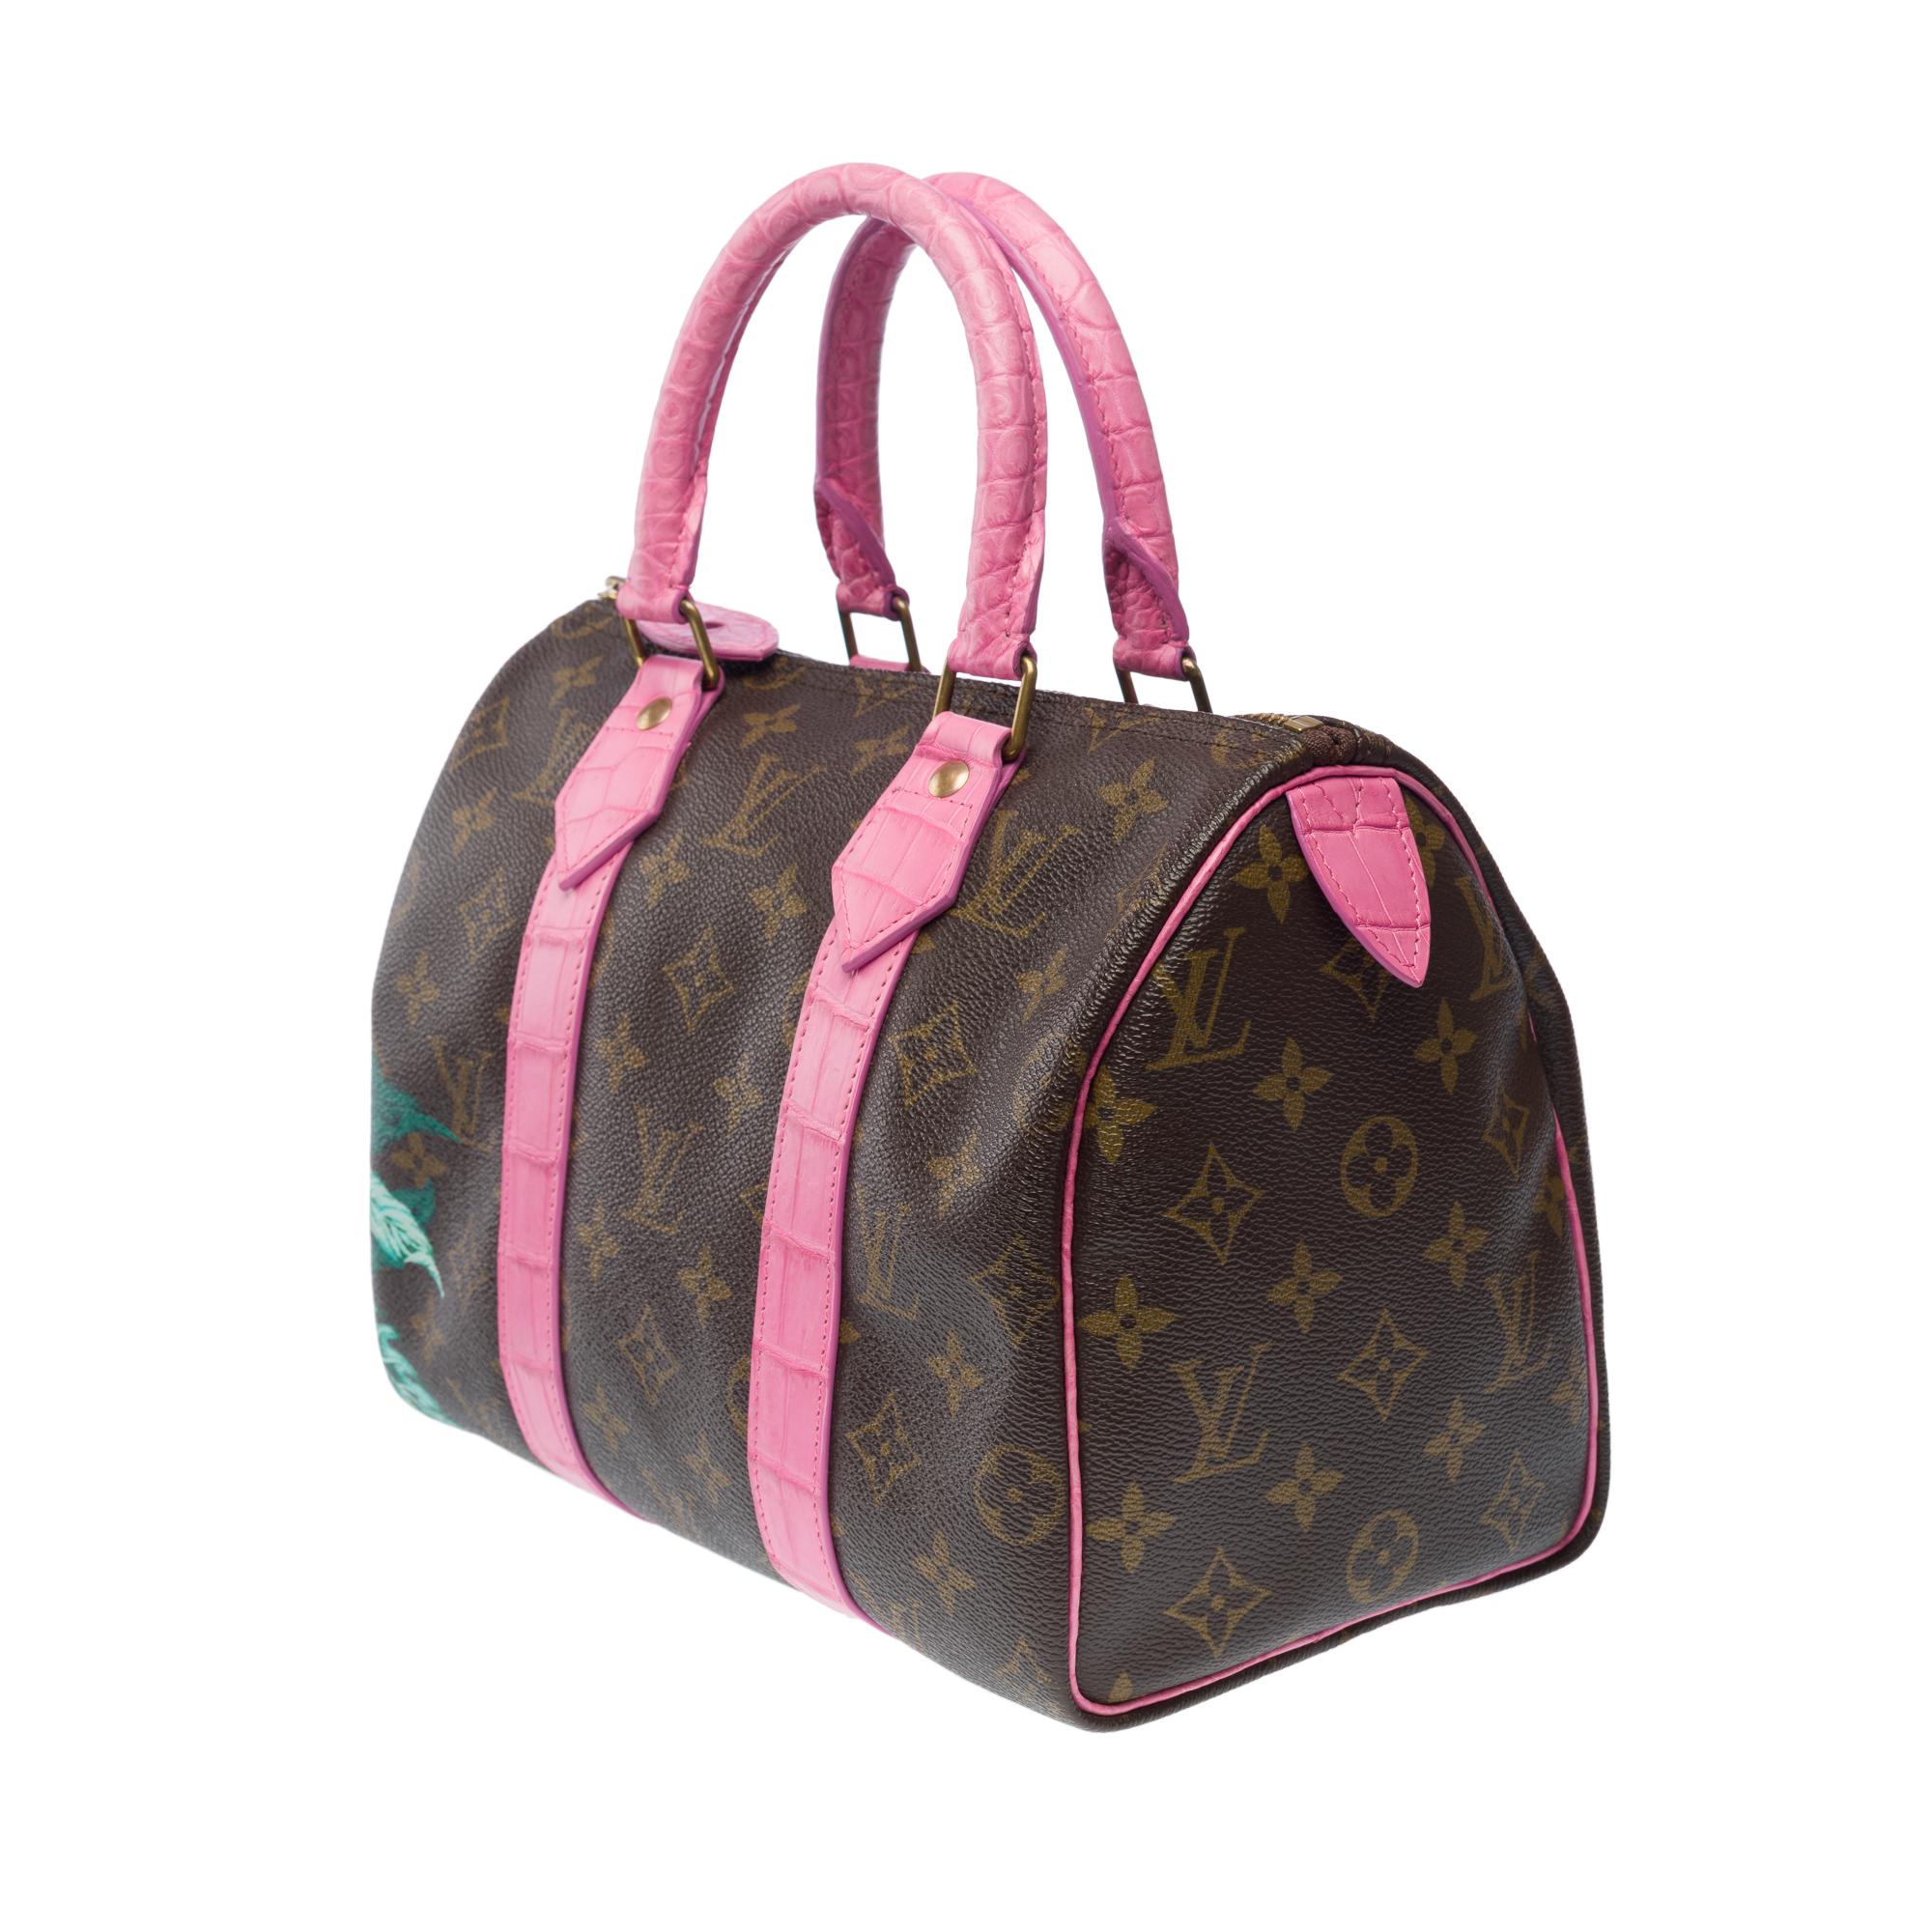 Customized Louis Vuitton Speedy 25 handbag Flowers with Pink Crocodile leather 2